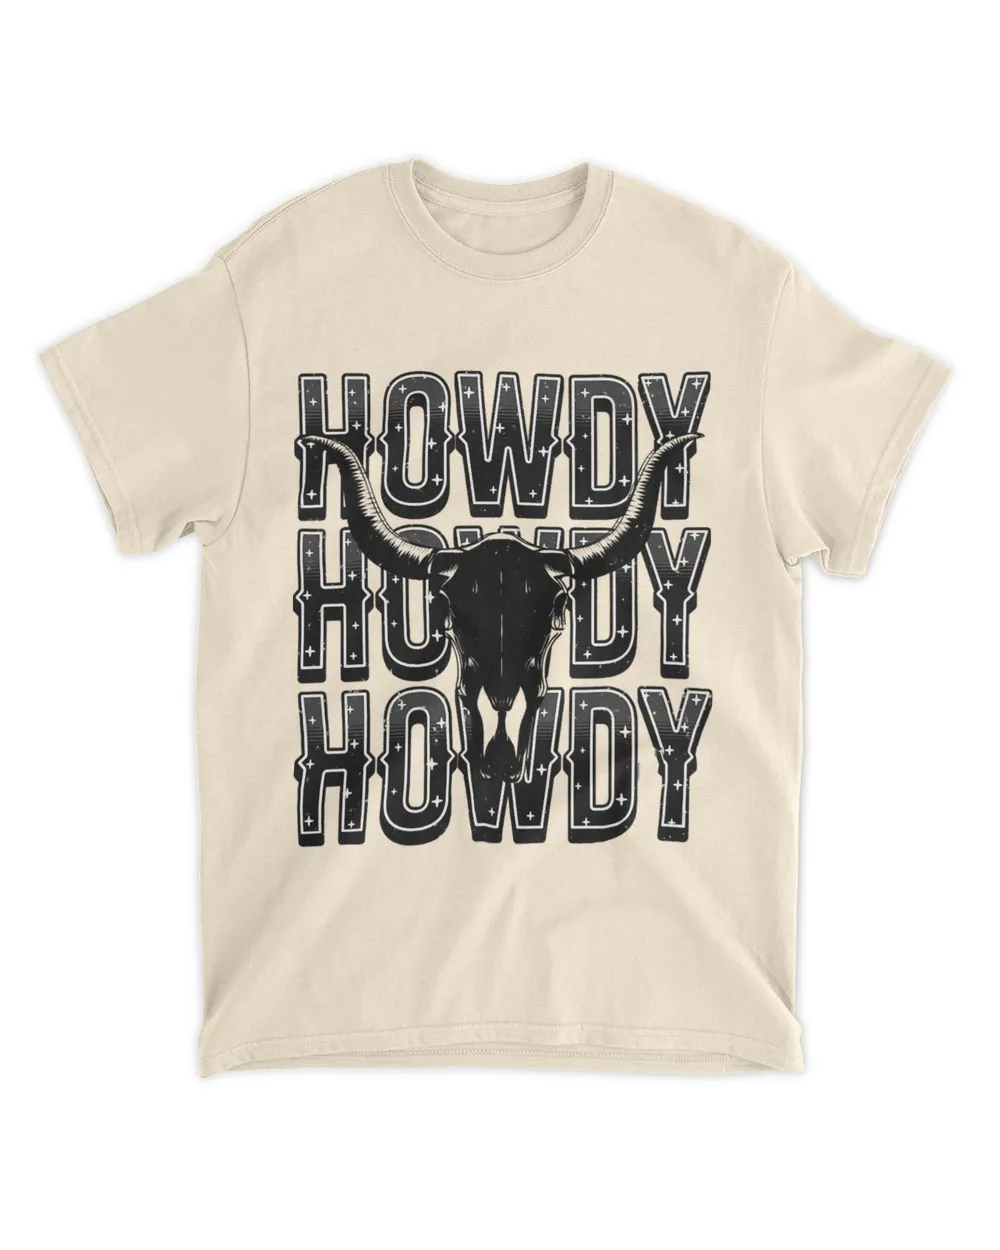 Cow Bull Skull Howdy Cowboy Cowgirl Western Country Music